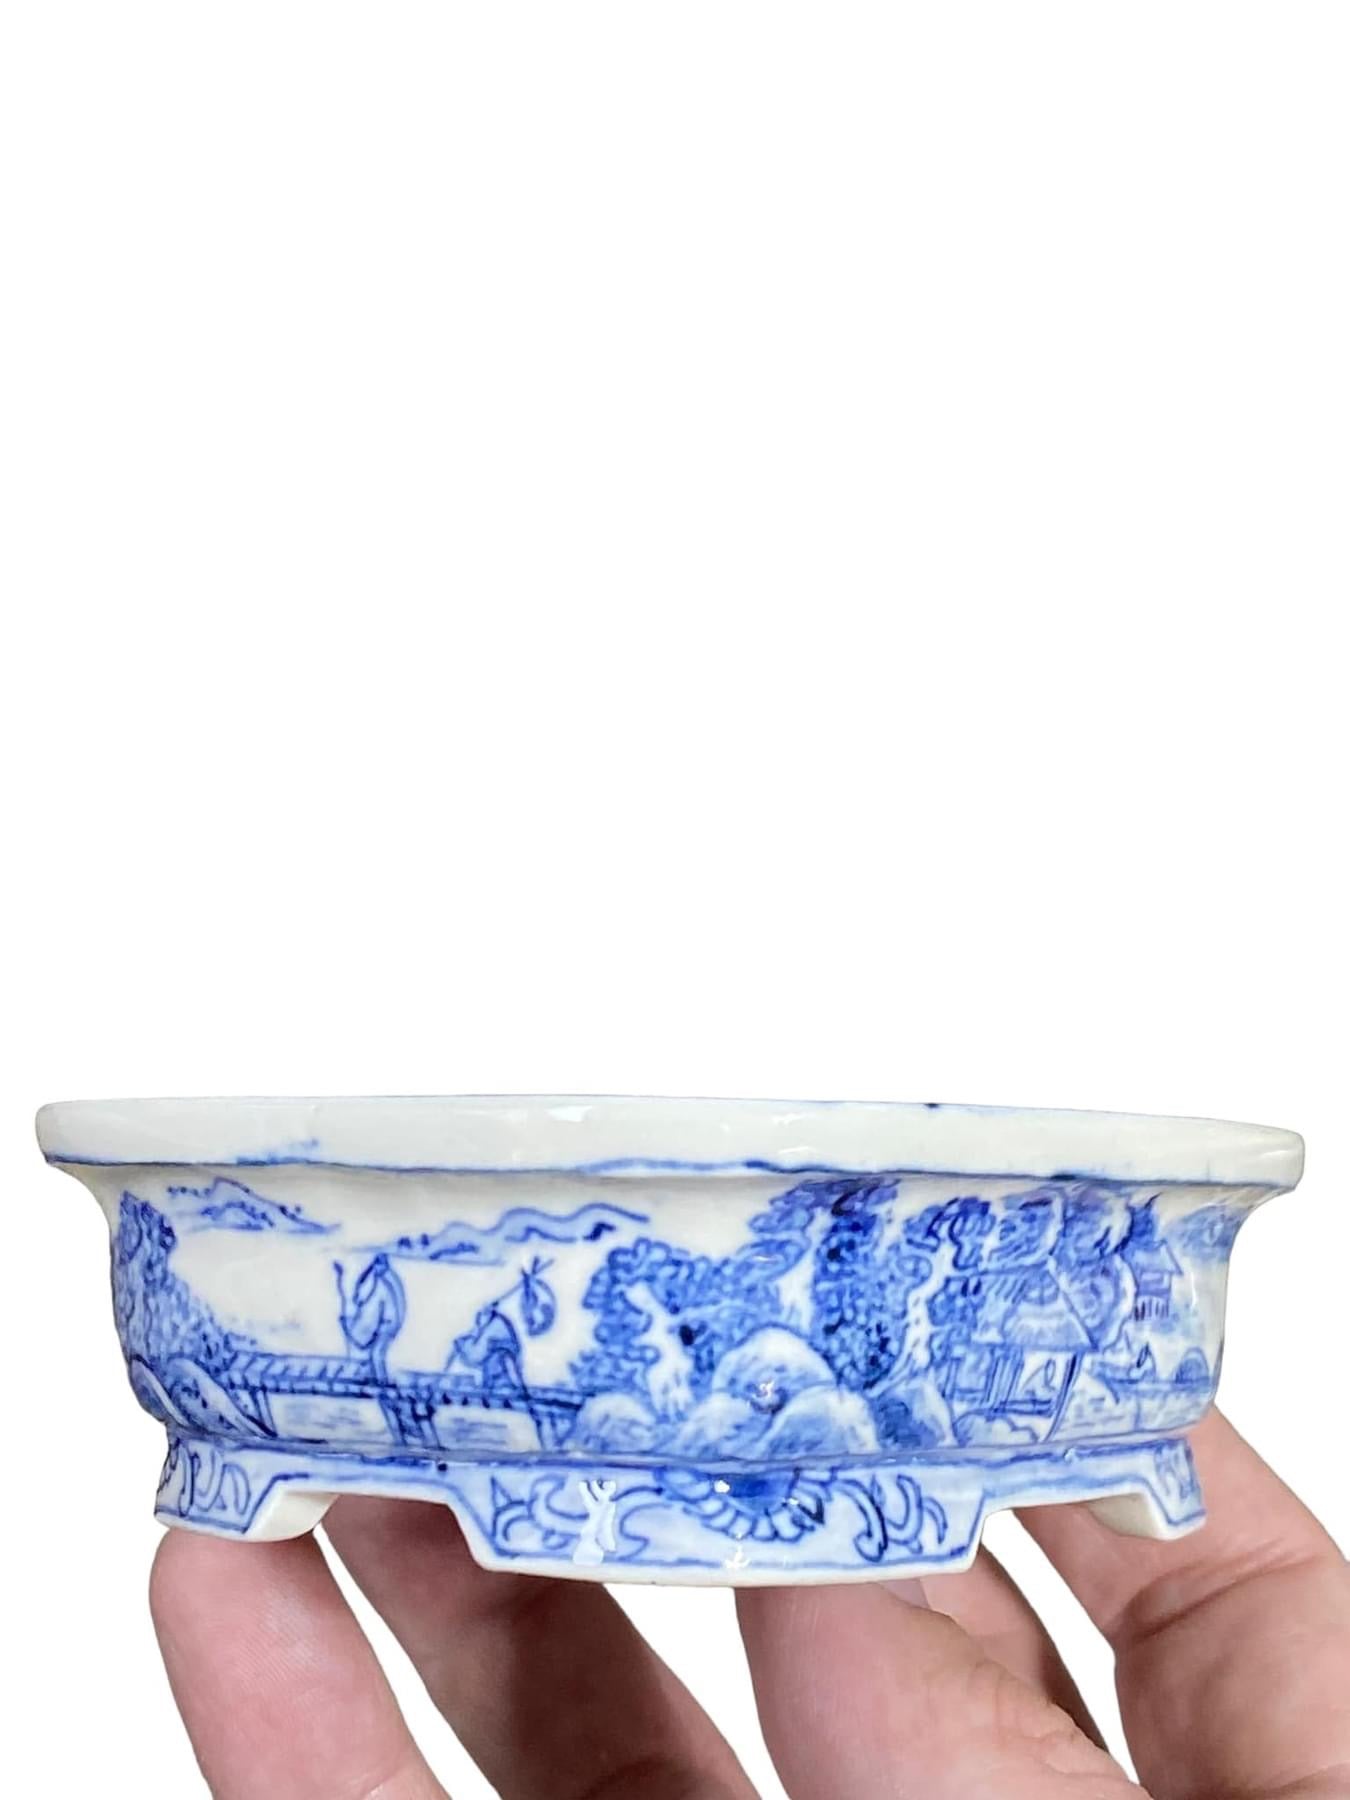 Joshu Katsuyama - Rare Exhibition Quality Painted Blue Bonsai Pot (4-1/8" wide)